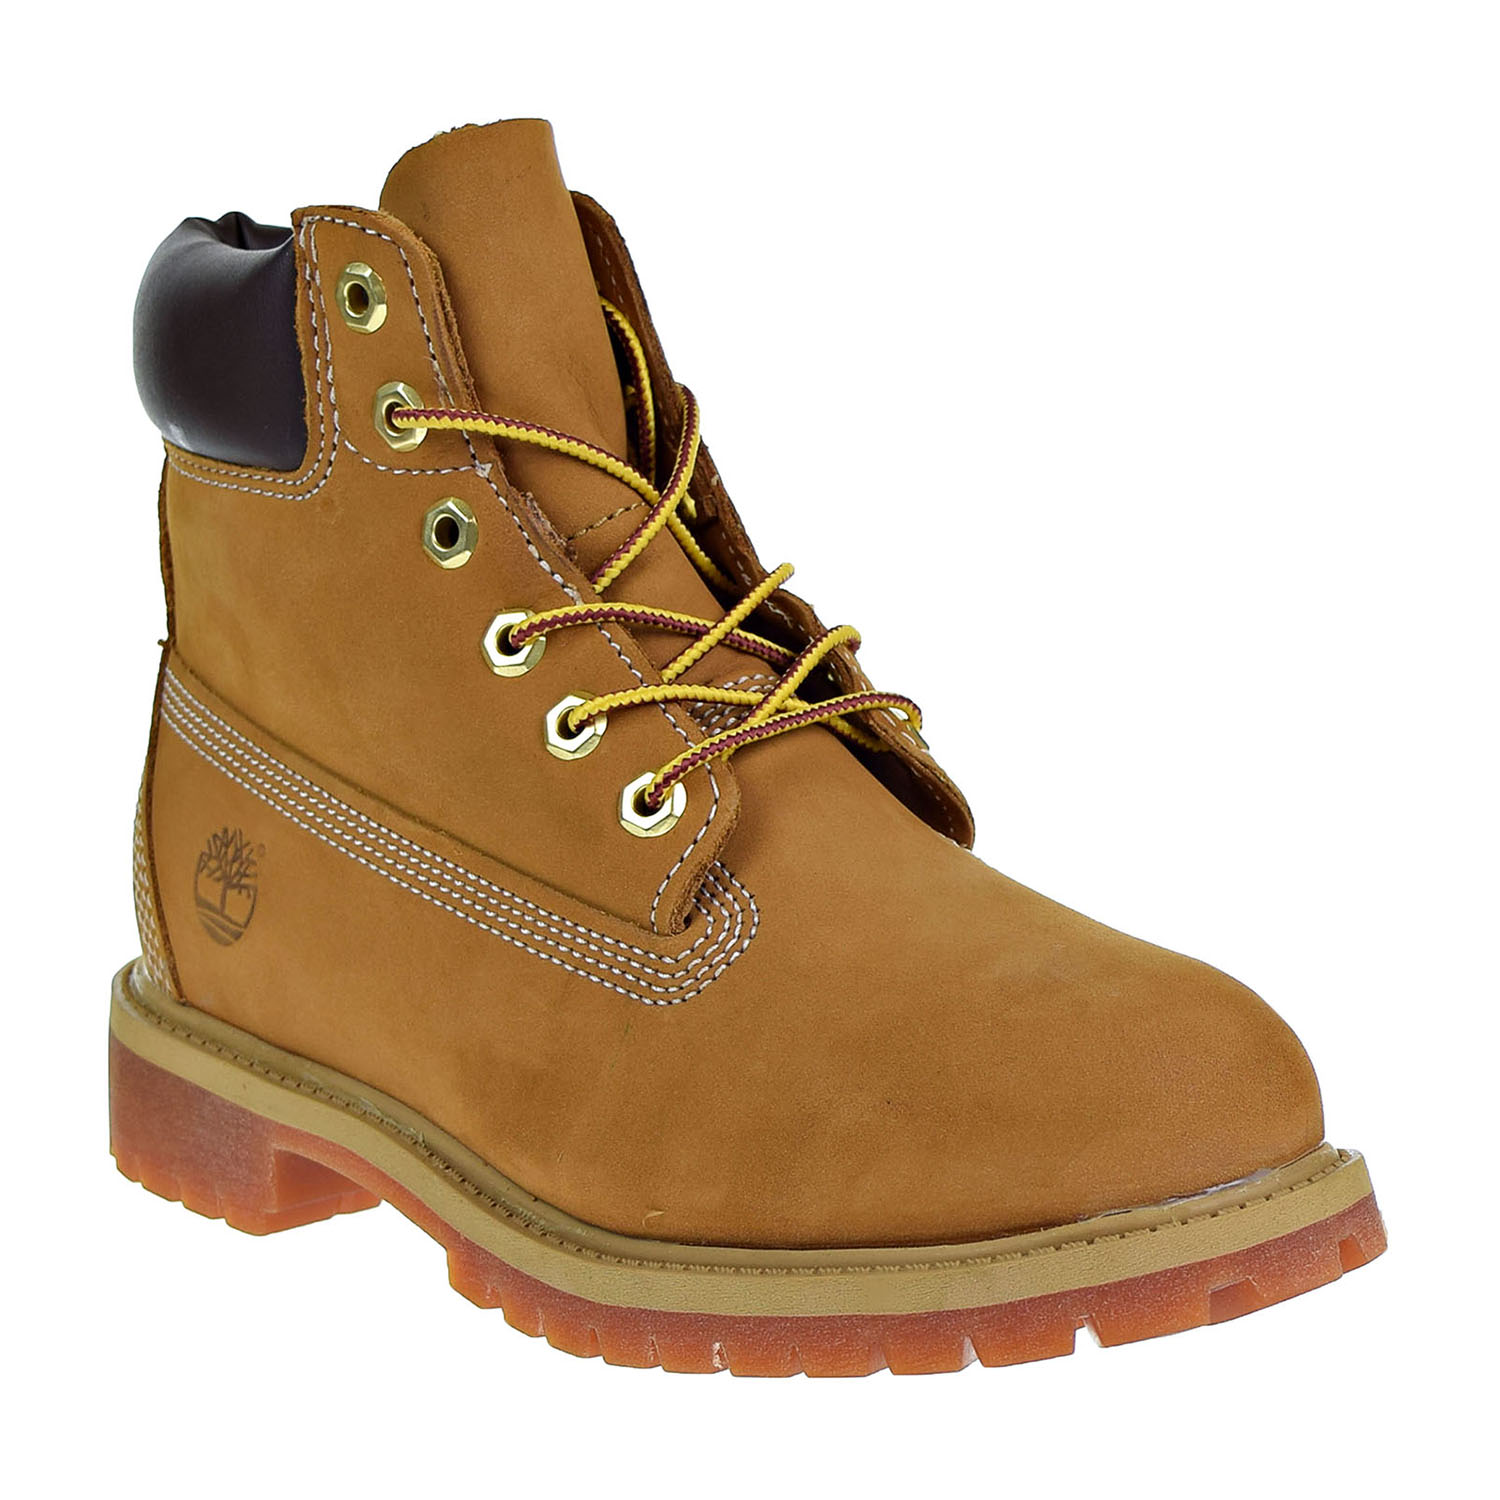 Timberland 6 Inch Premium Waterproof Little Kids Boots Wheat 12709 | eBay